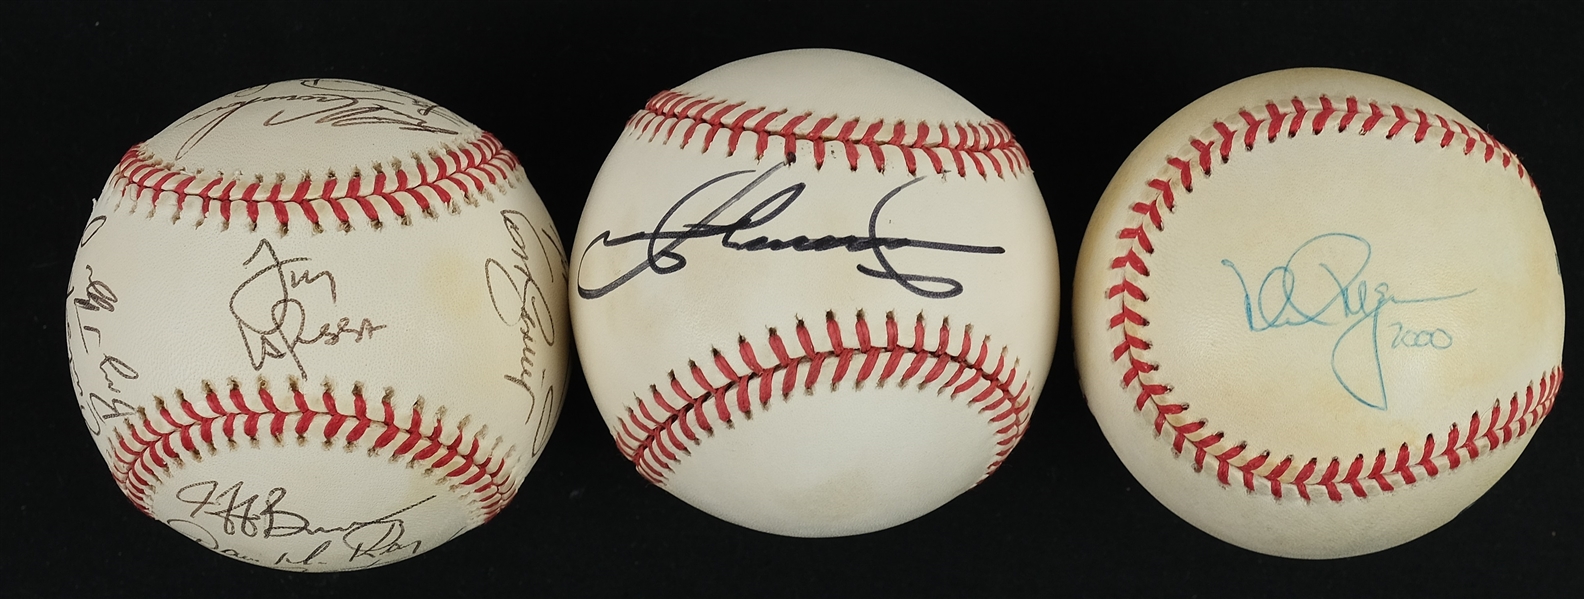 Mark McGwire Sammy Sosa & 1998 Cardinals Autographed Baseballs